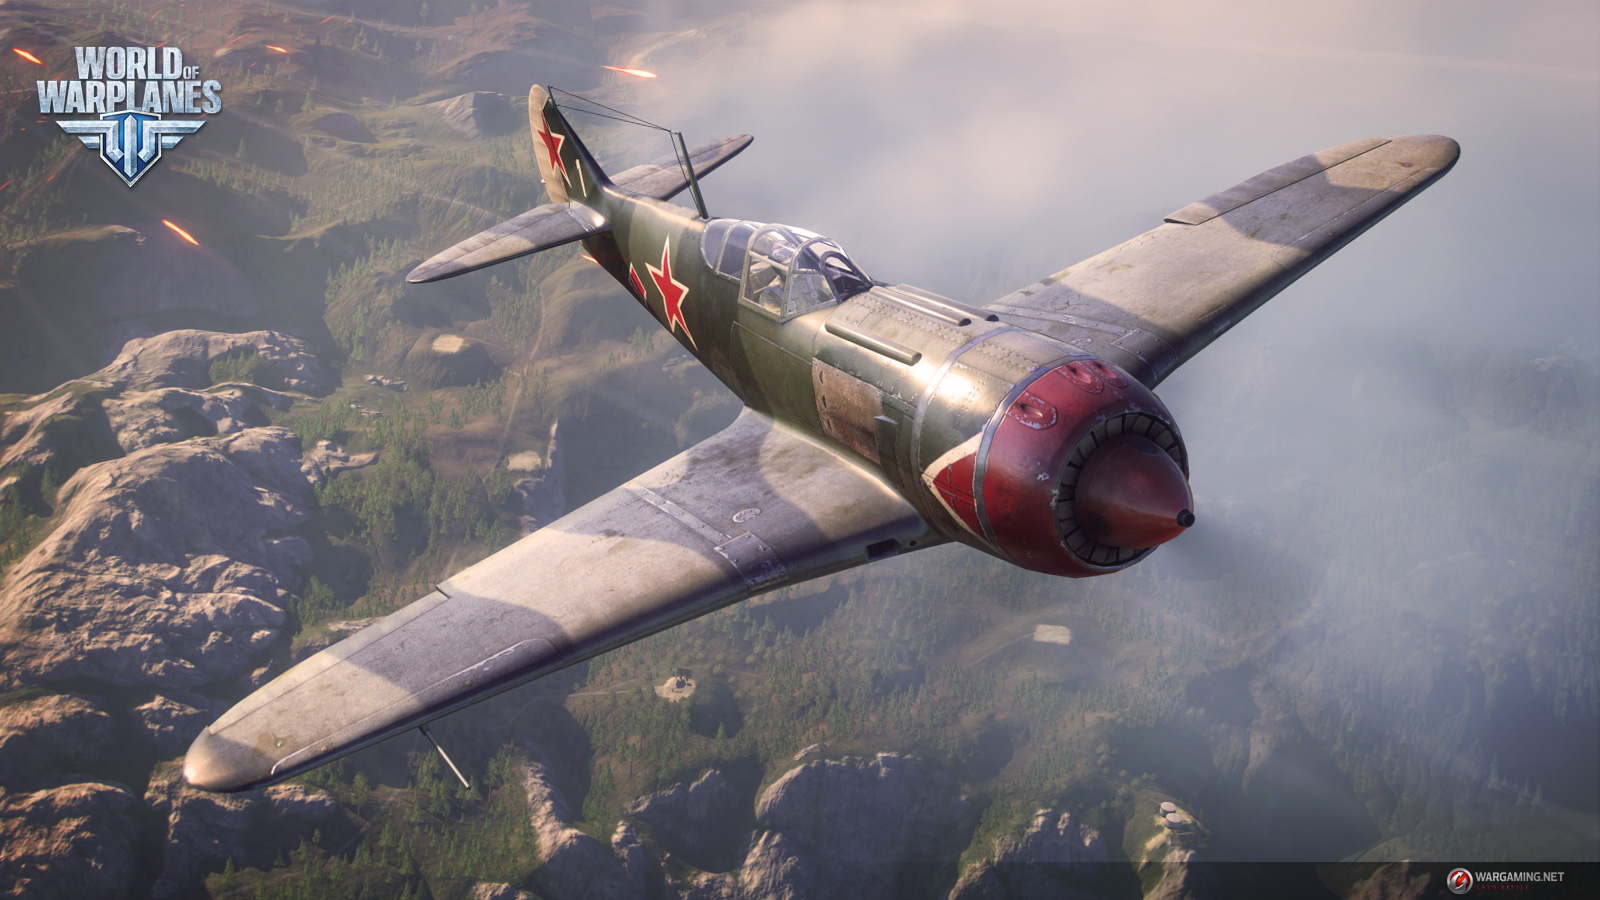 World Of Warplanes Backgrounds on Wallpapers Vista